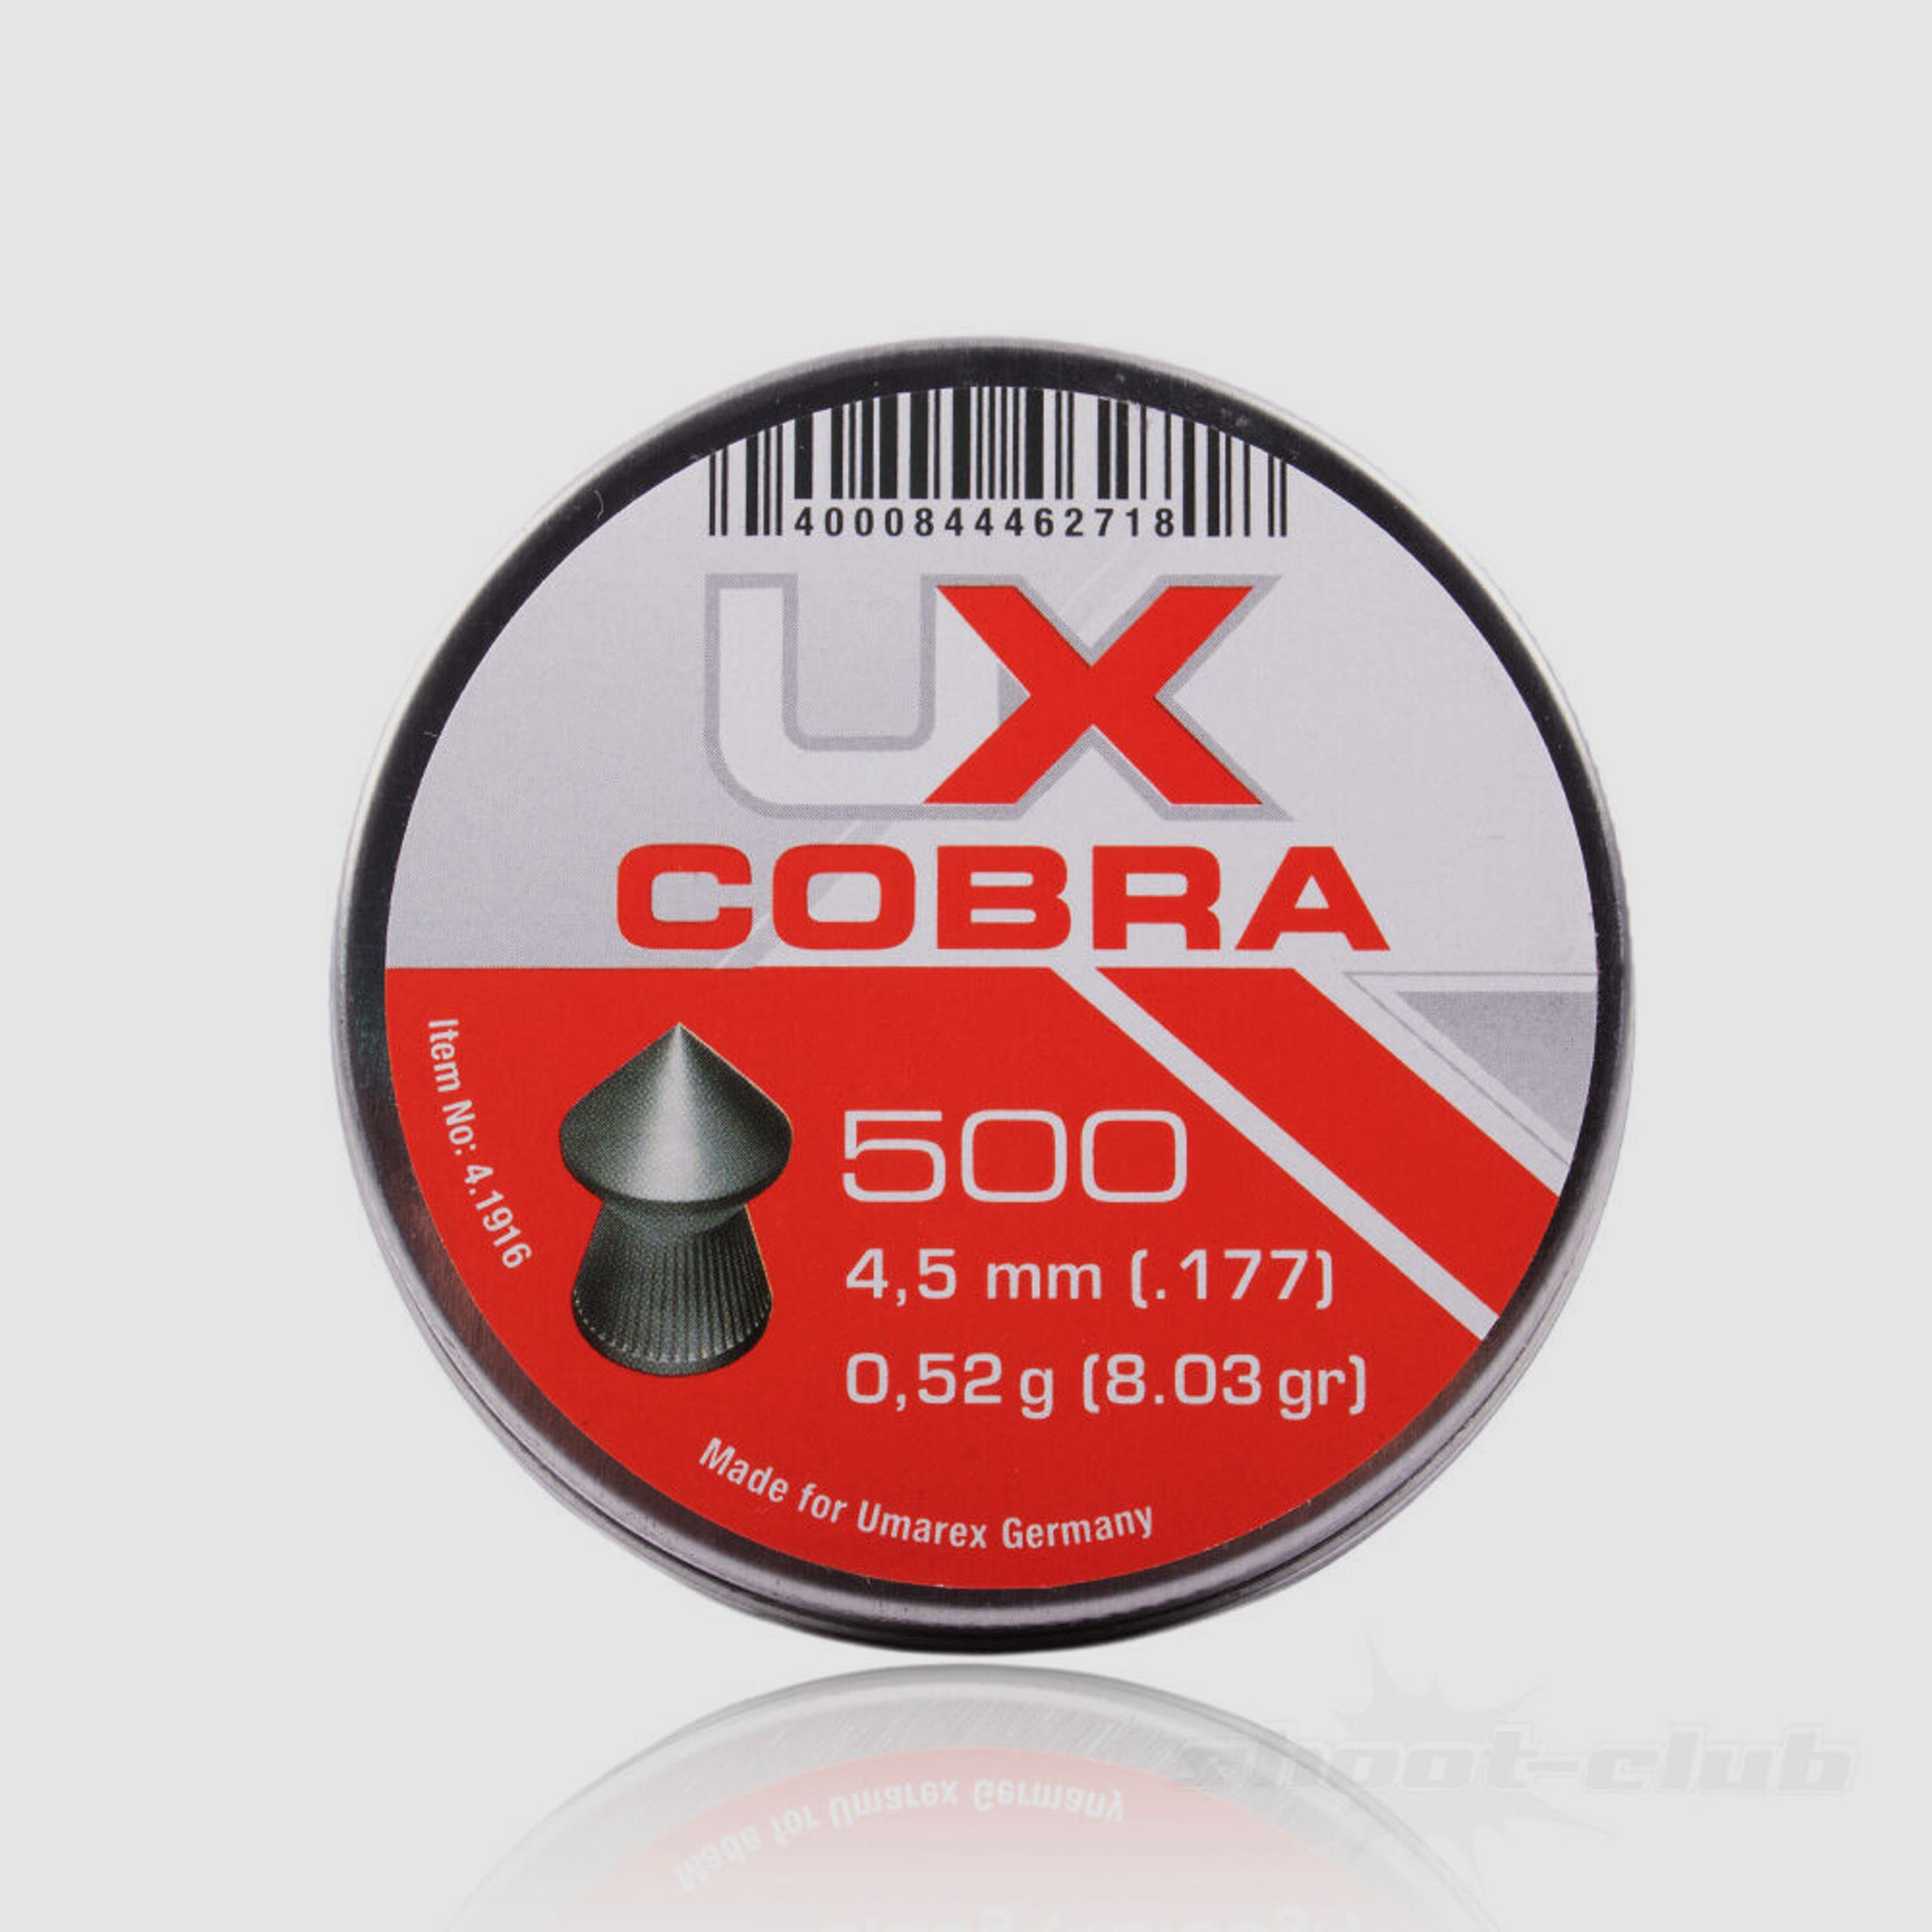 UX Cobra Spitzkopf Diabolos .4,5mm geriffelt 500 Stück